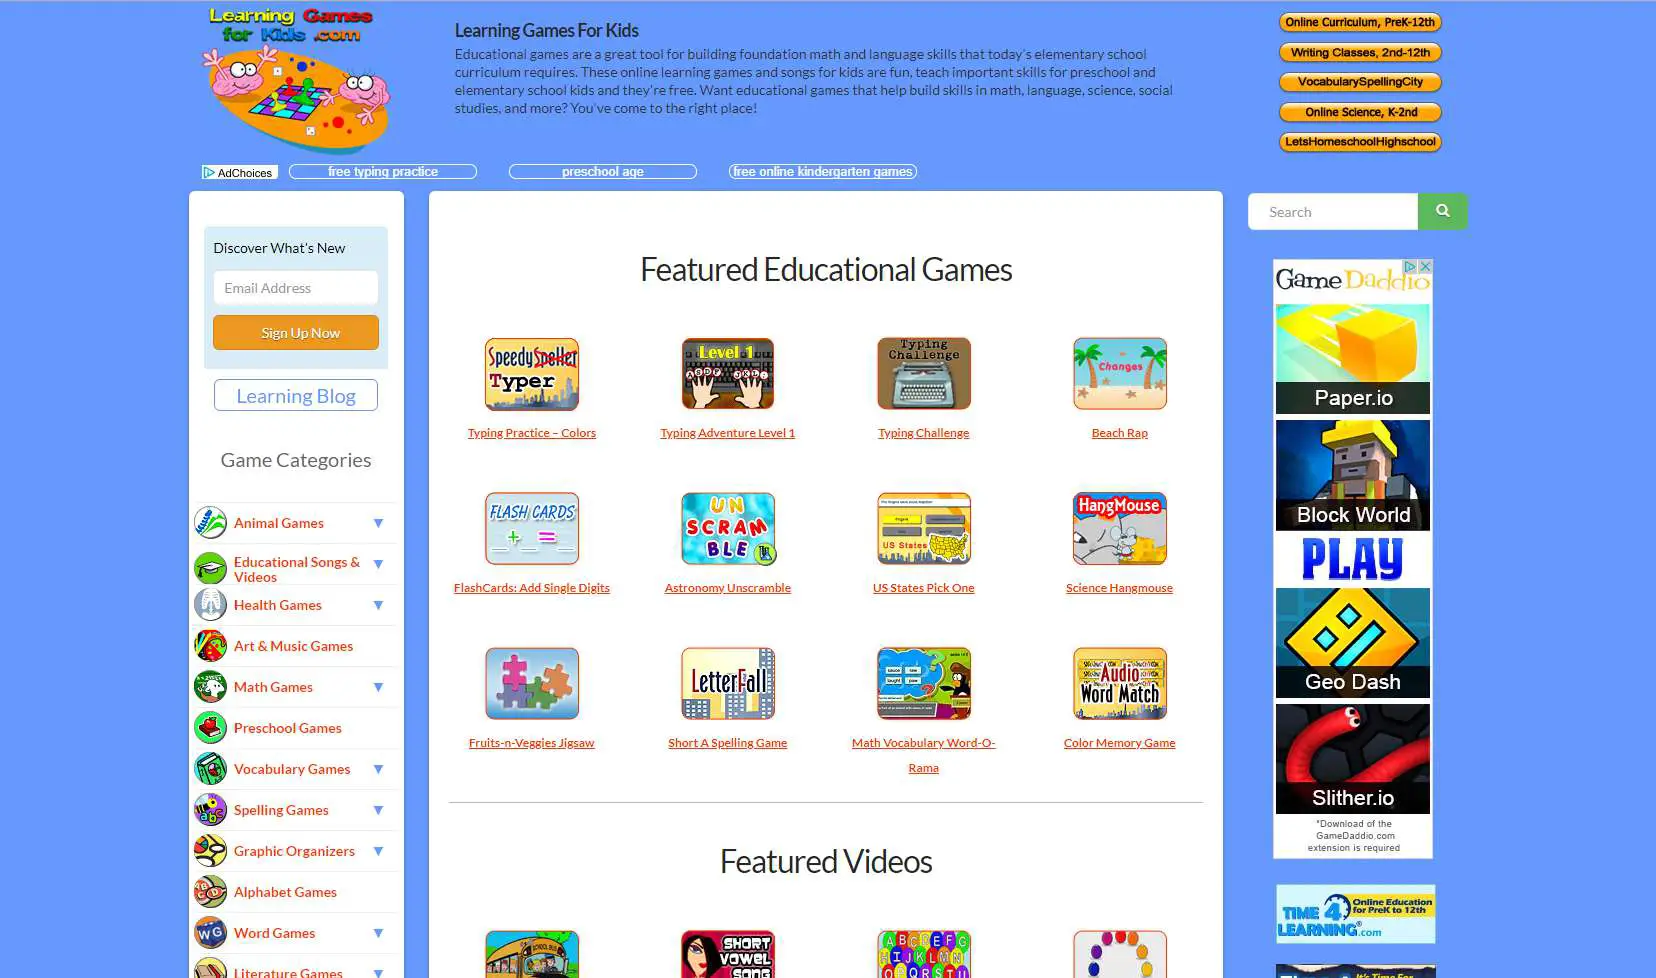 Jogos educacionais no site Learning Games for Kids